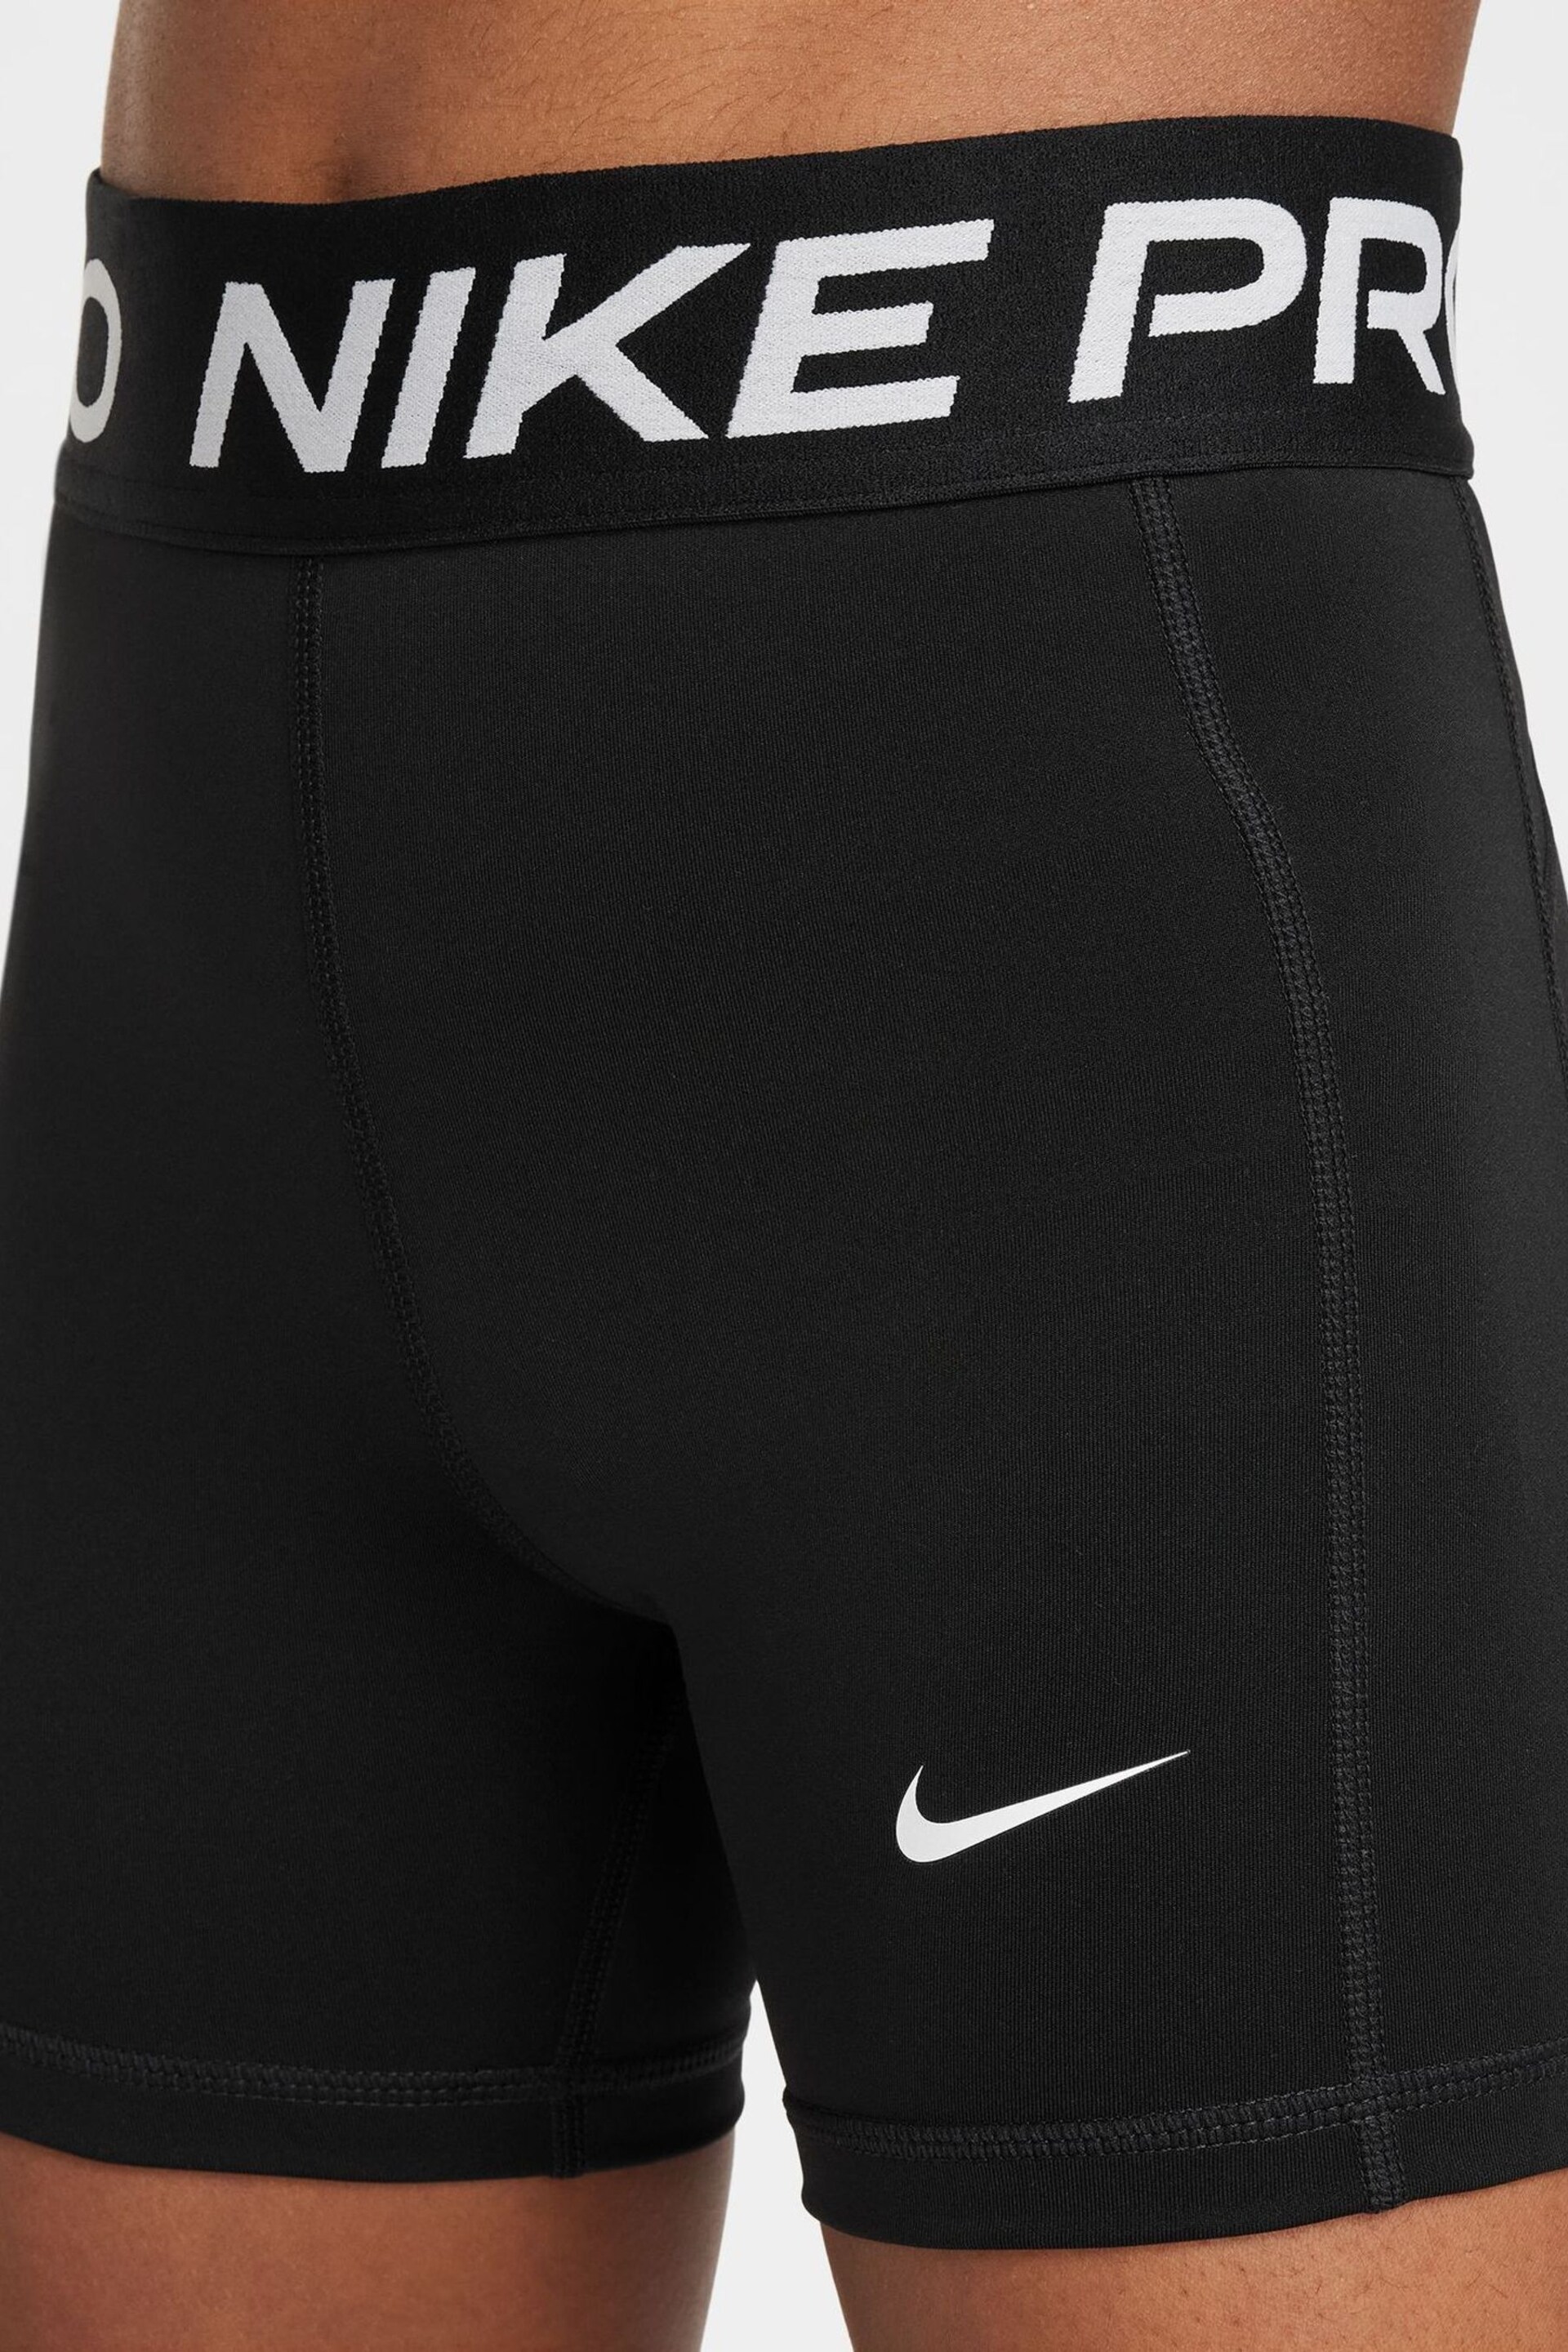 Nike Black Pro 3 Inch Period Leak Protection Shorts - Image 5 of 6